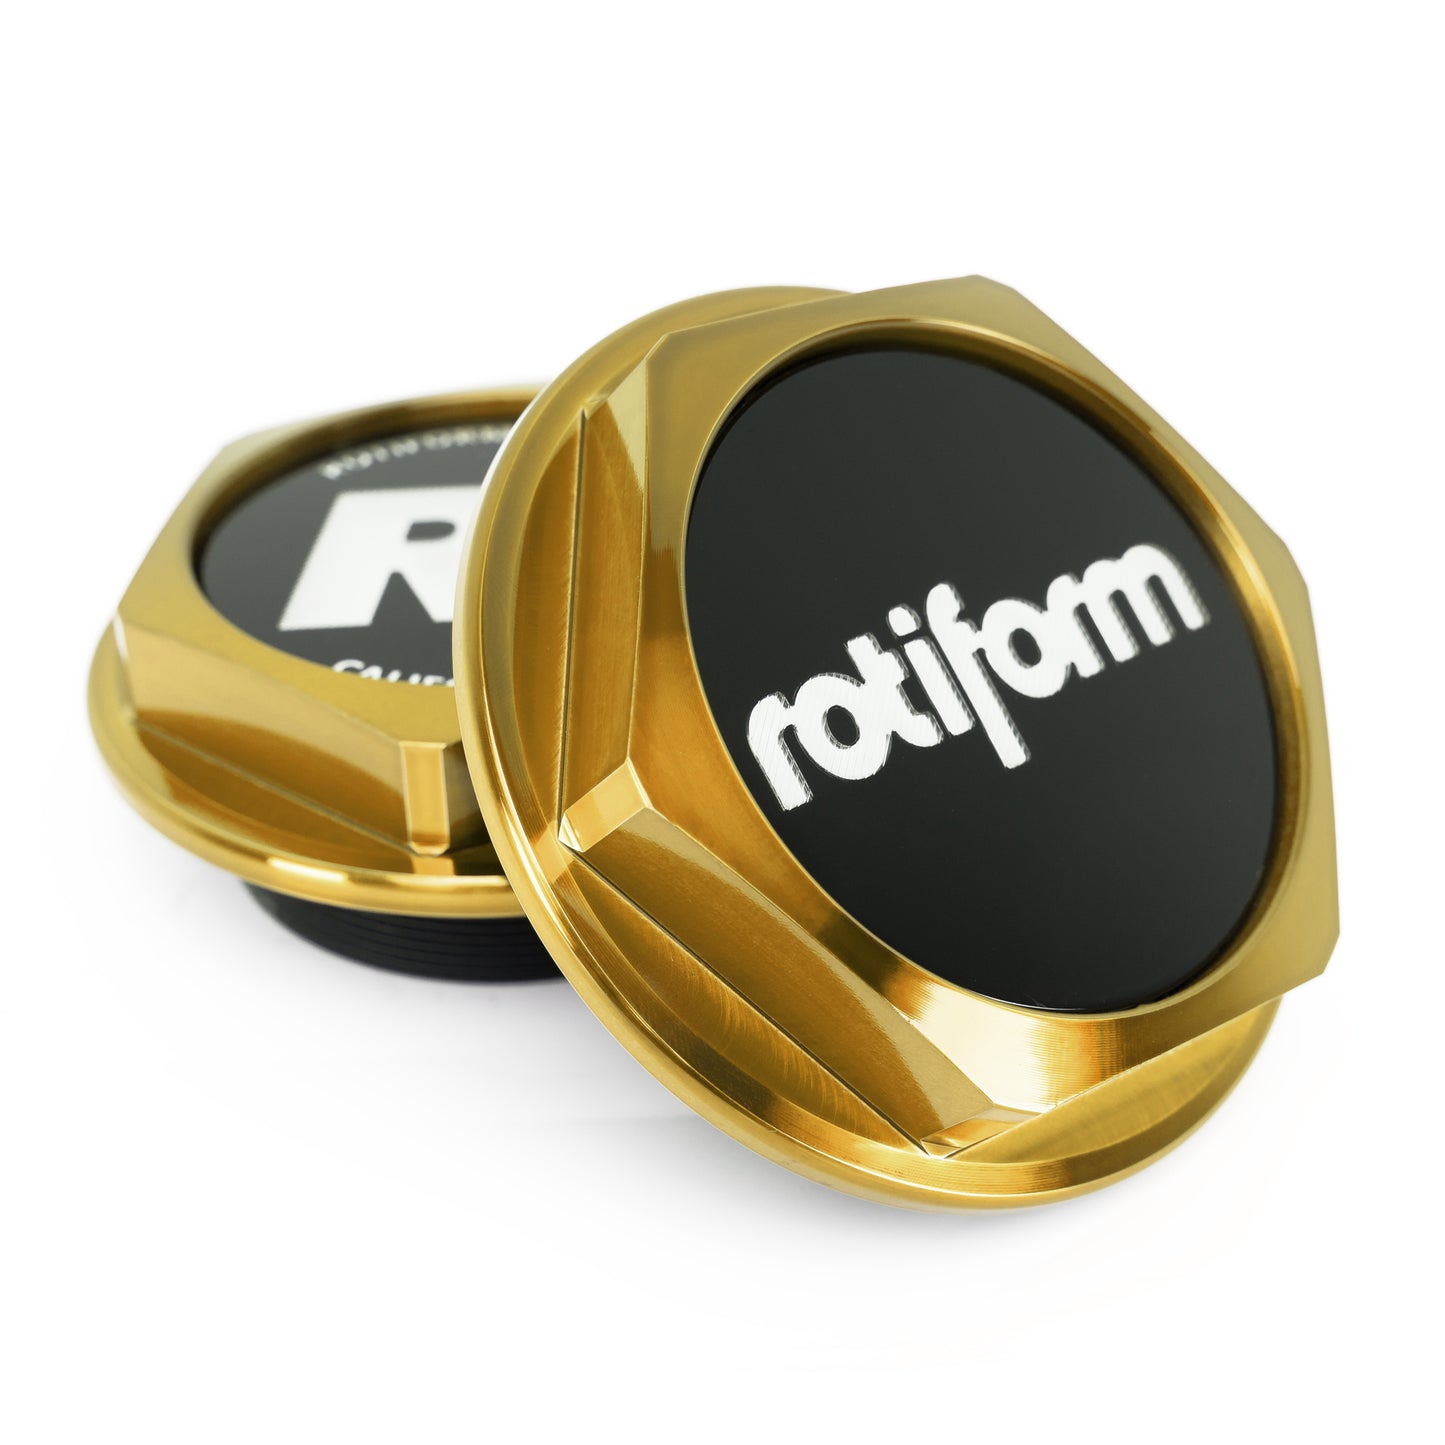 Rotiform Zentralverschluss in Candy Gold Optik